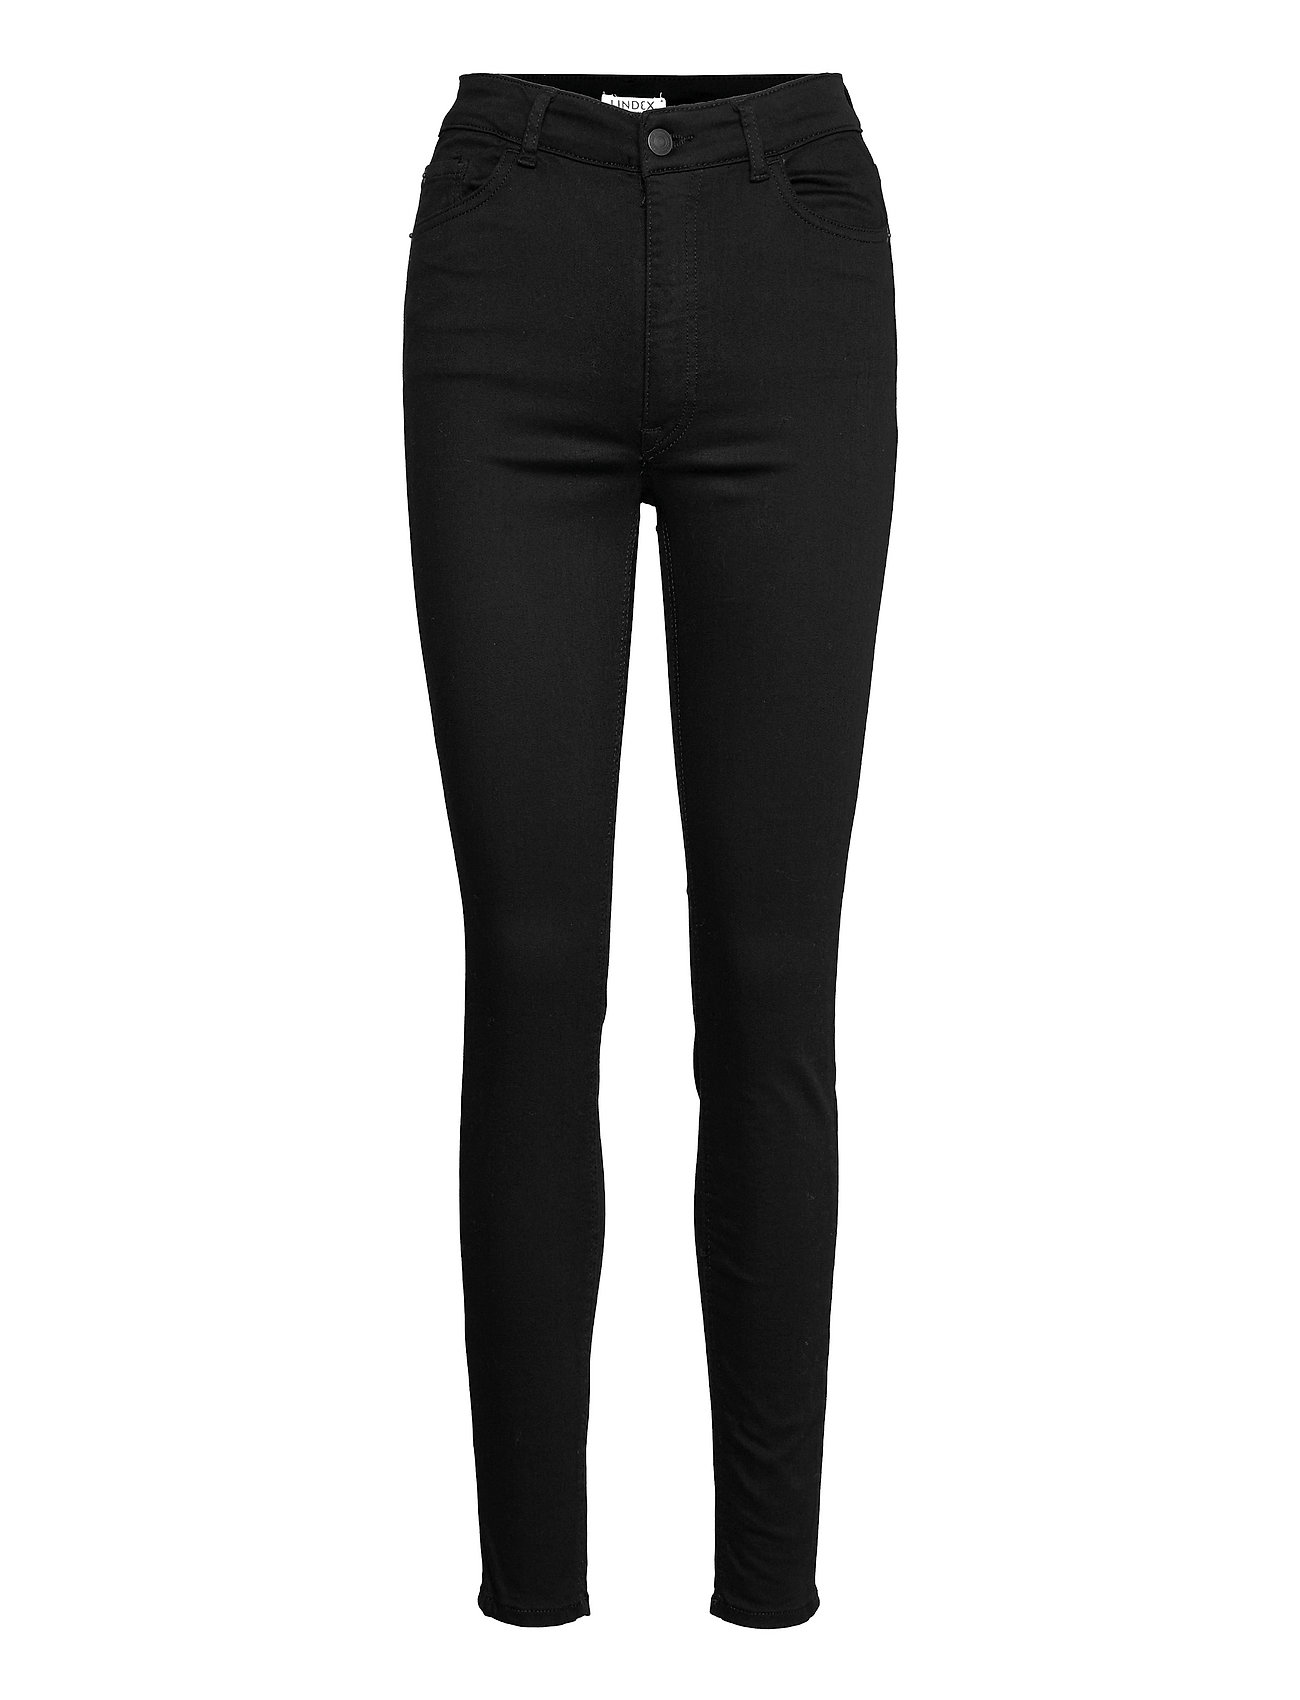 Lindex - Trousers denim Vera stay black - jeans slim - black - 1